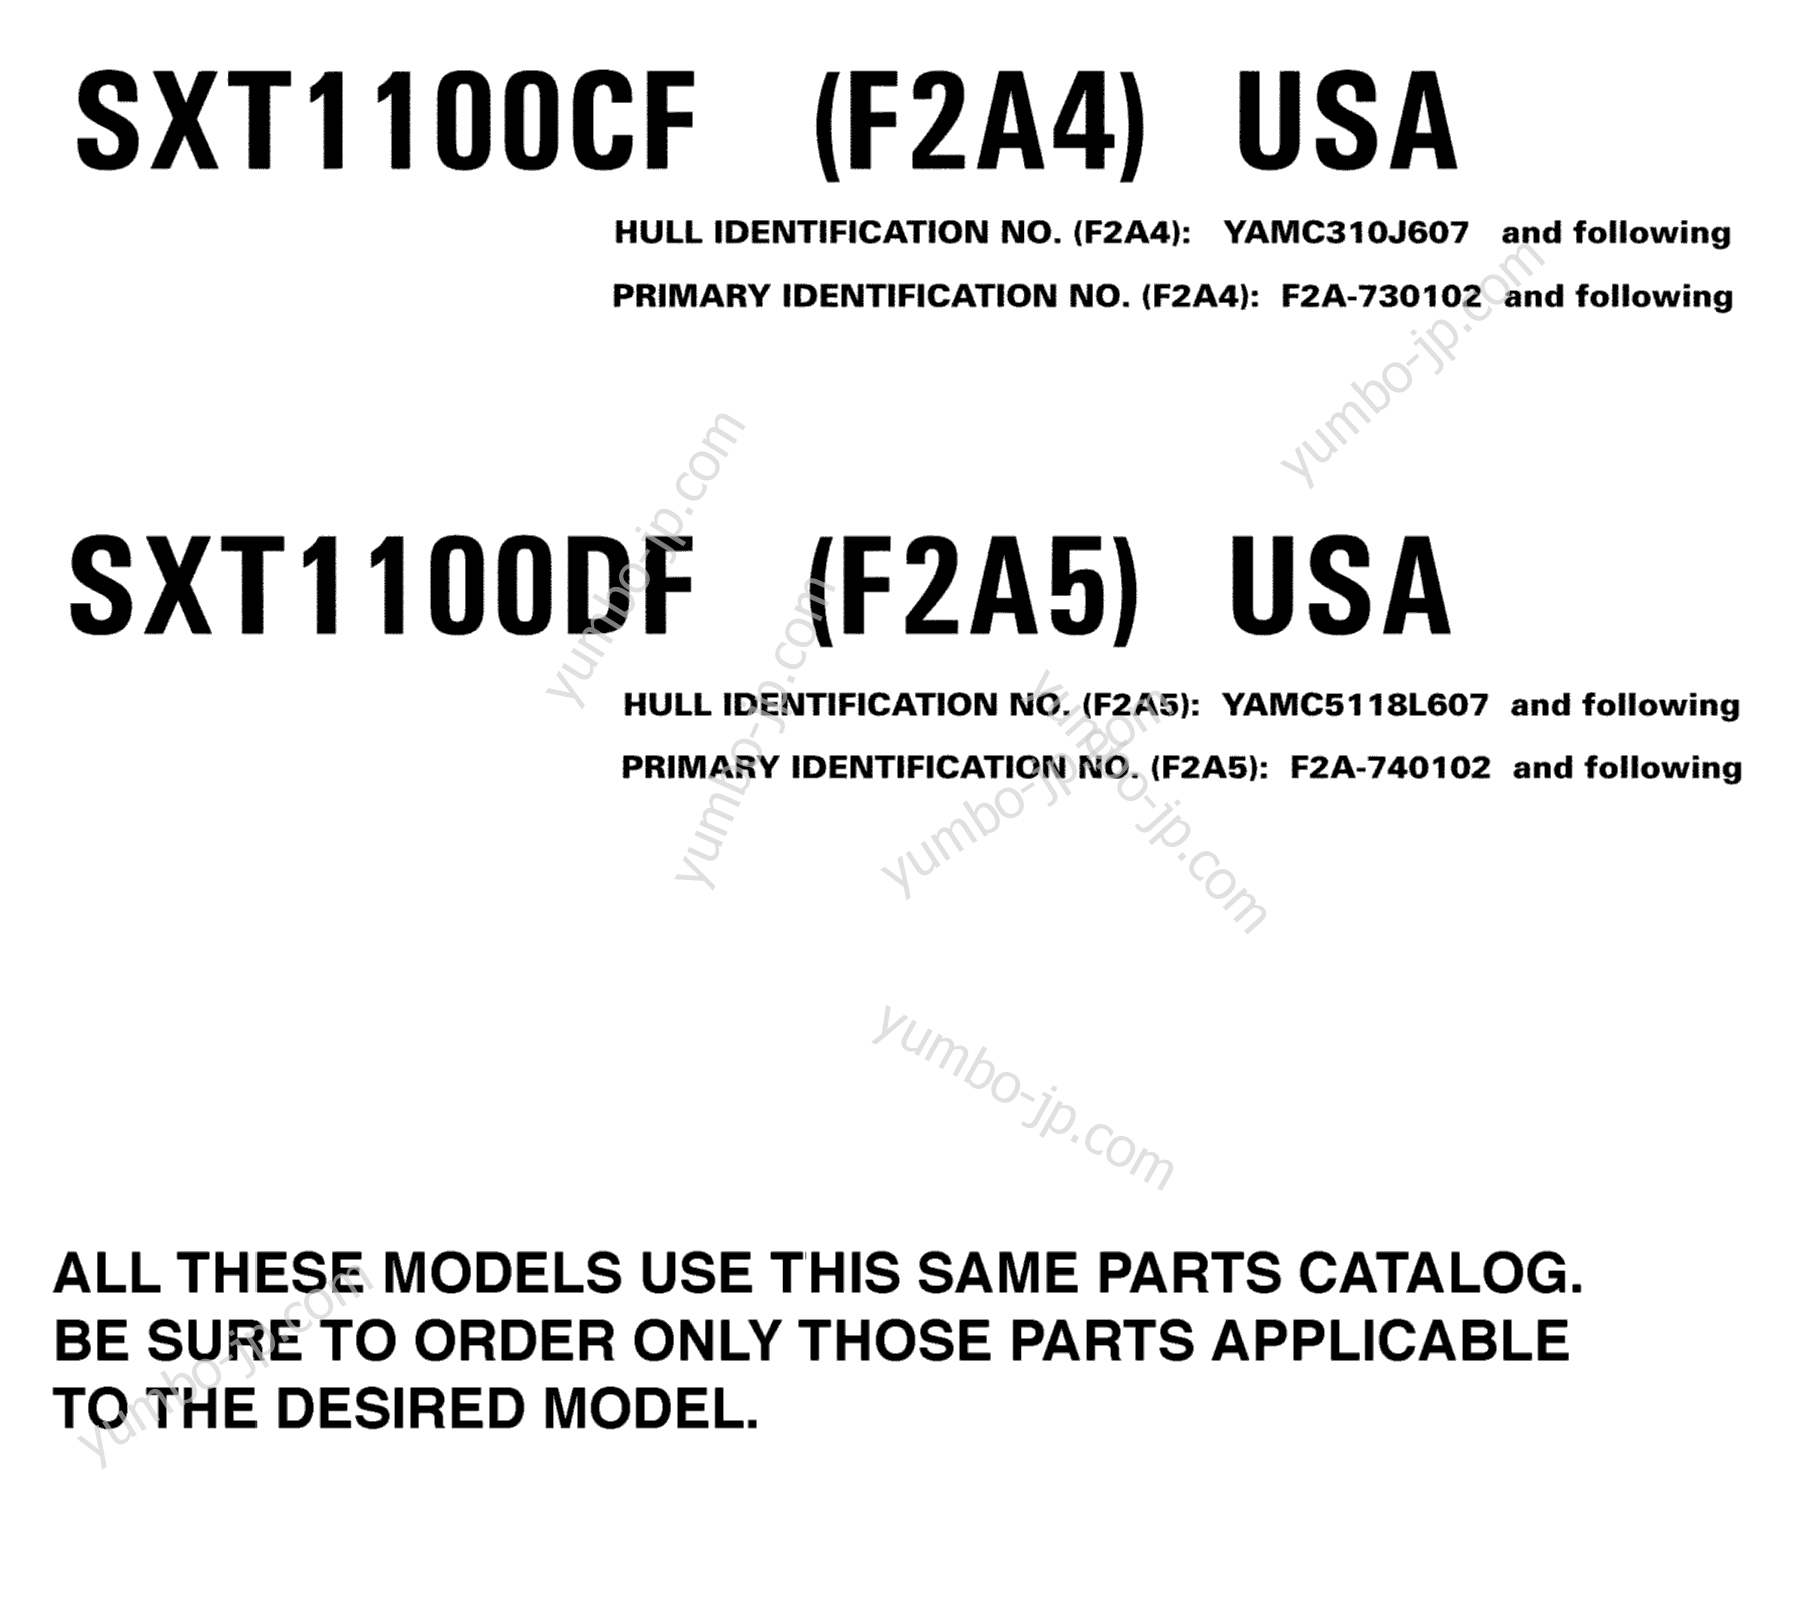 Models In This Catalog для катеров YAMAHA AR230 HO (ORANGE) (SXT1100DF) 2007 г.